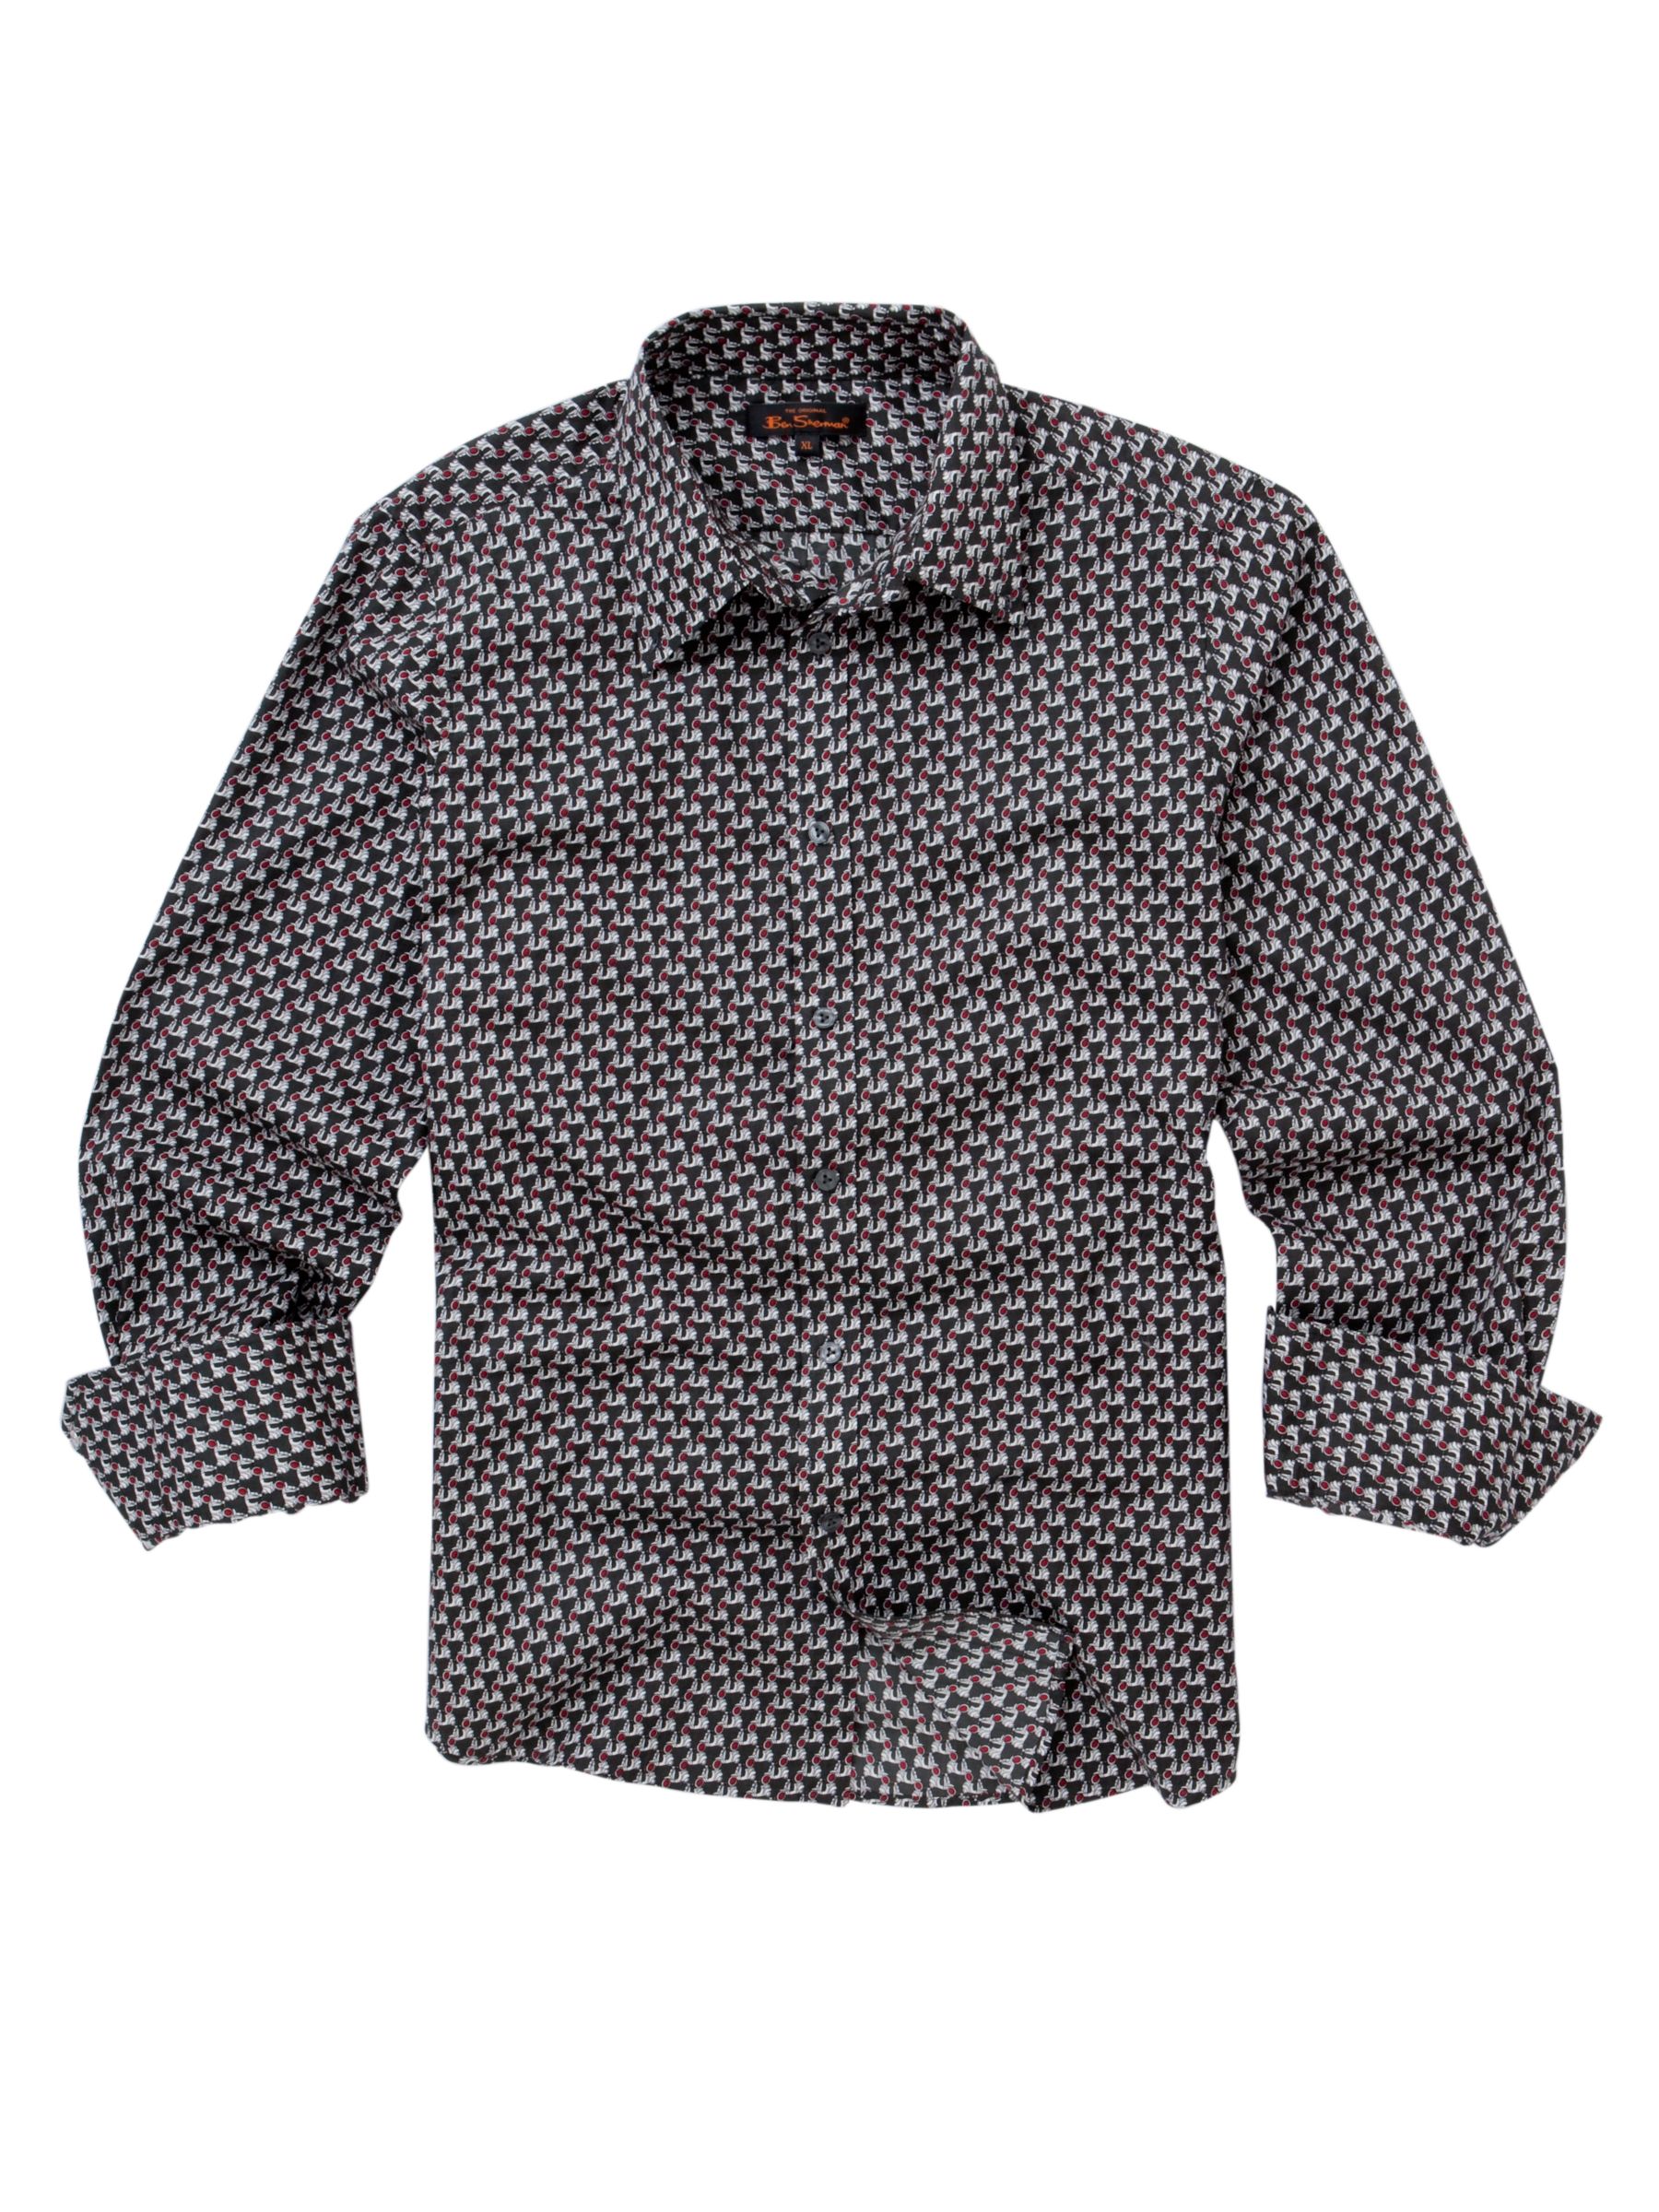 Scooter Print Shirt, Black/multicolour